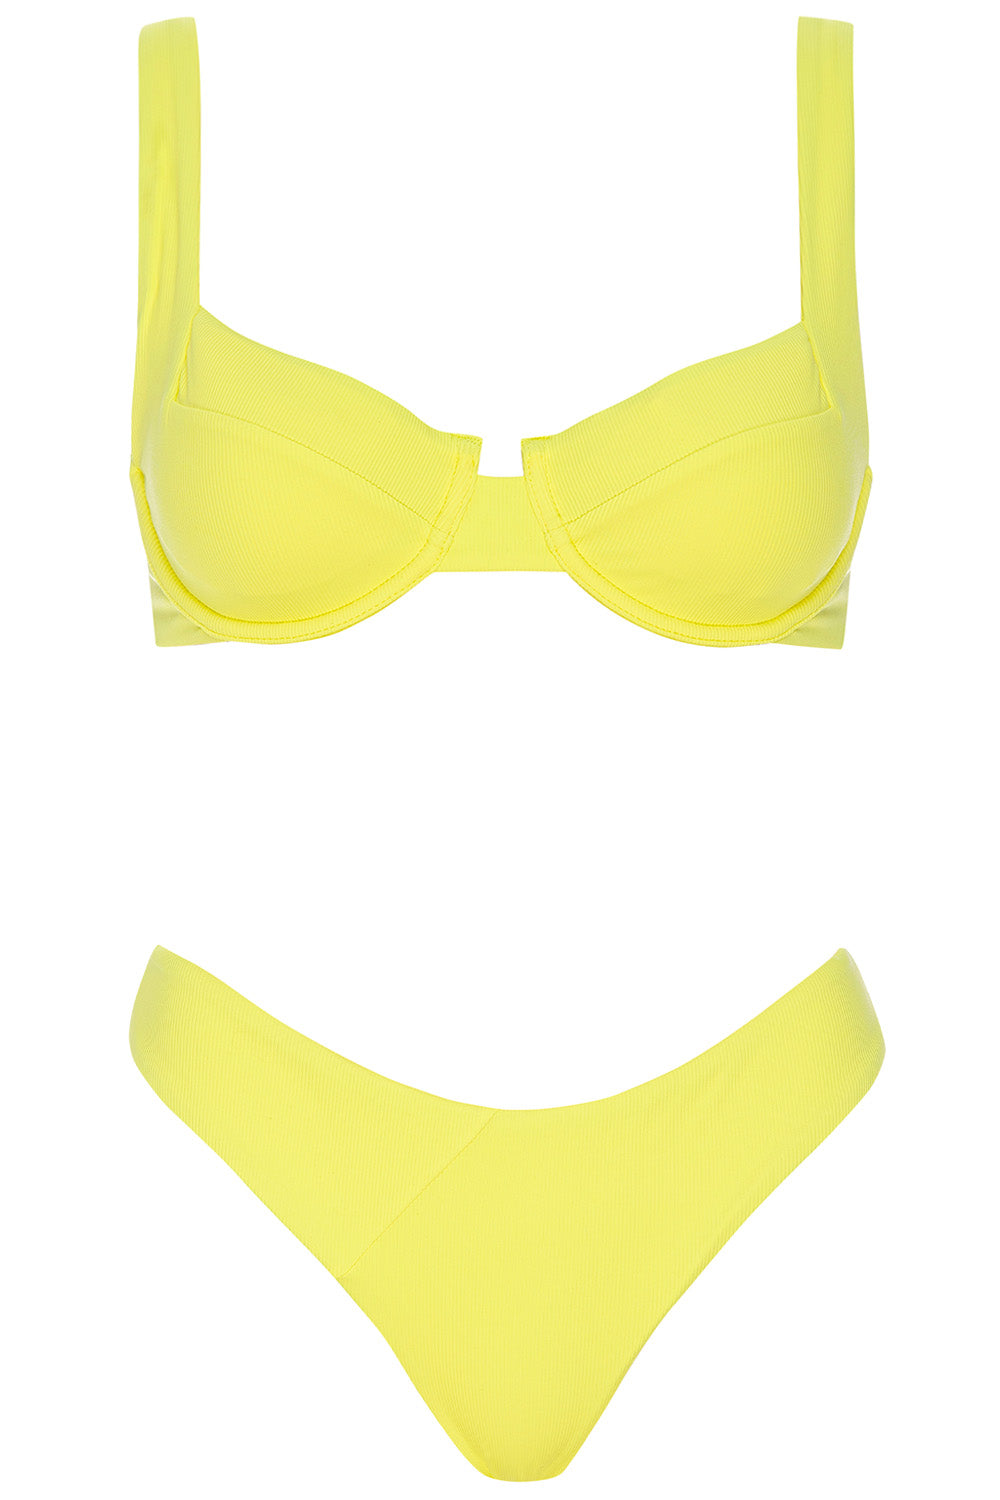 Front view of the Laguna bikini yellow ribbed set on a white background